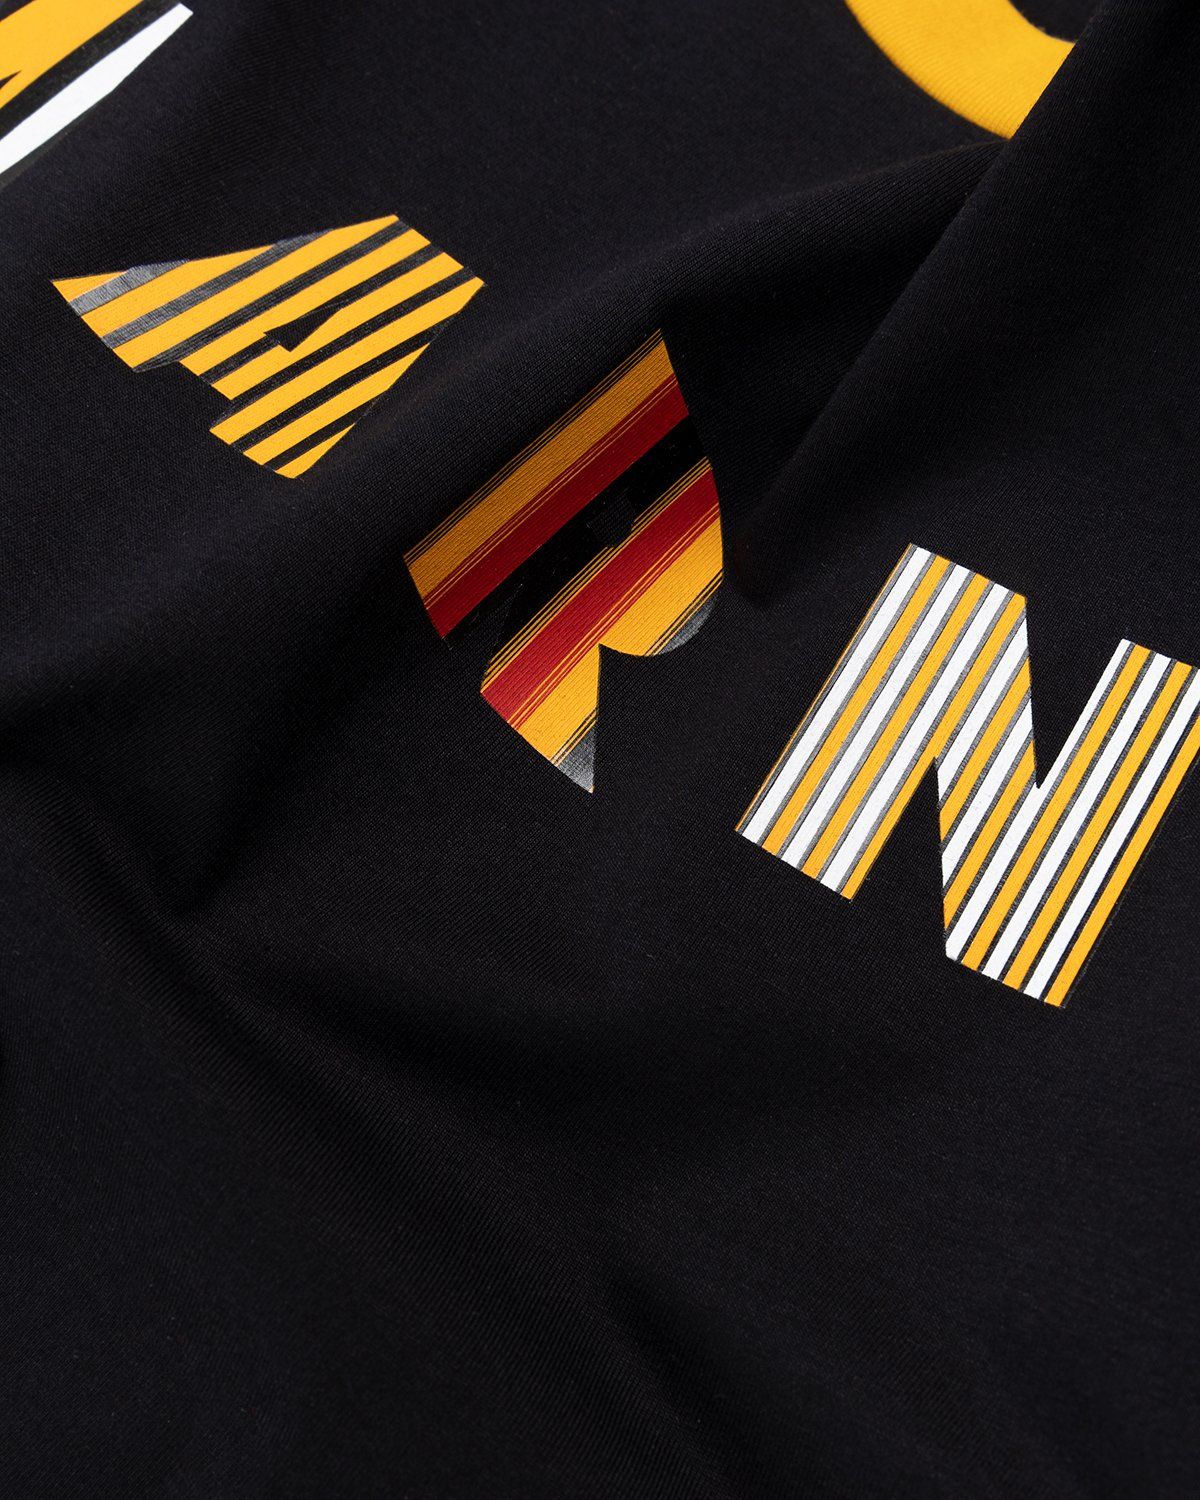 Marni – Stripe Logo Bio Jersey T-Shirt Black/Gold - Tops - Yellow - Image 5